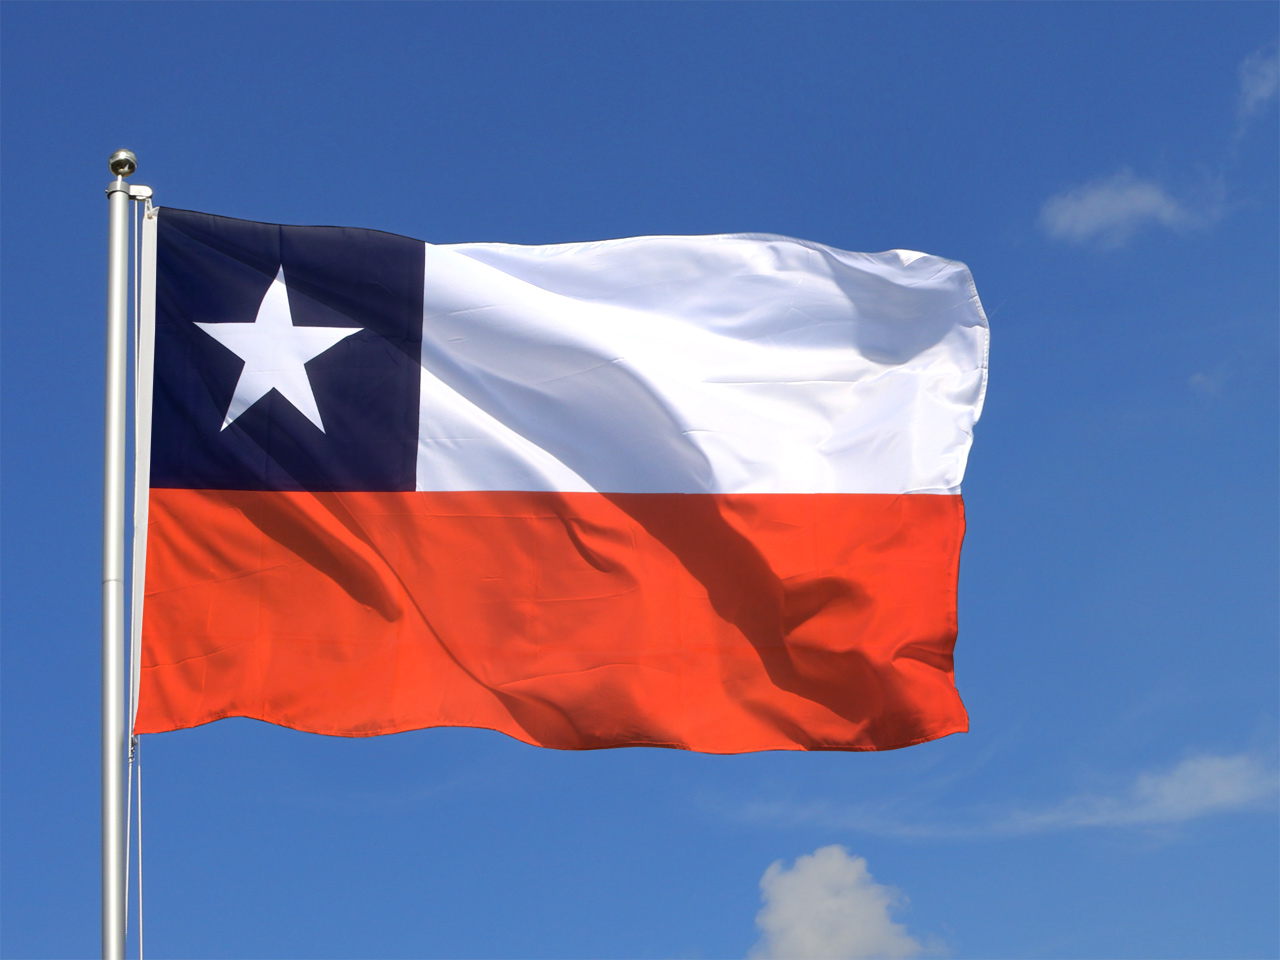 Flagge Fahne Chile Hissflagge 90 x 150 cm